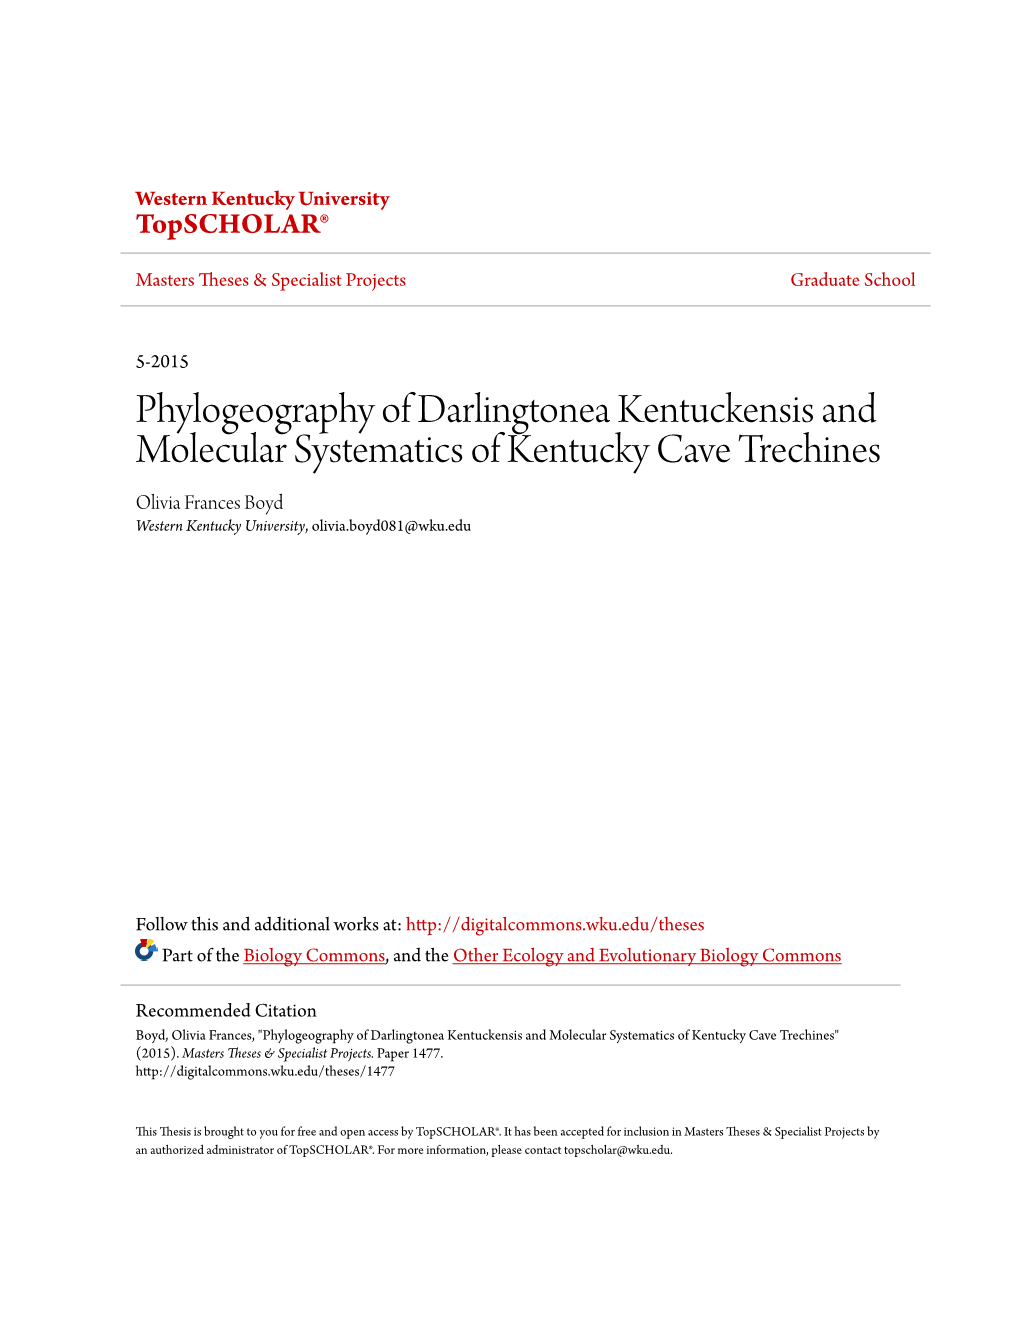 Phylogeography of Darlingtonea Kentuckensis and Molecular Systematics of Kentucky Cave Trechines